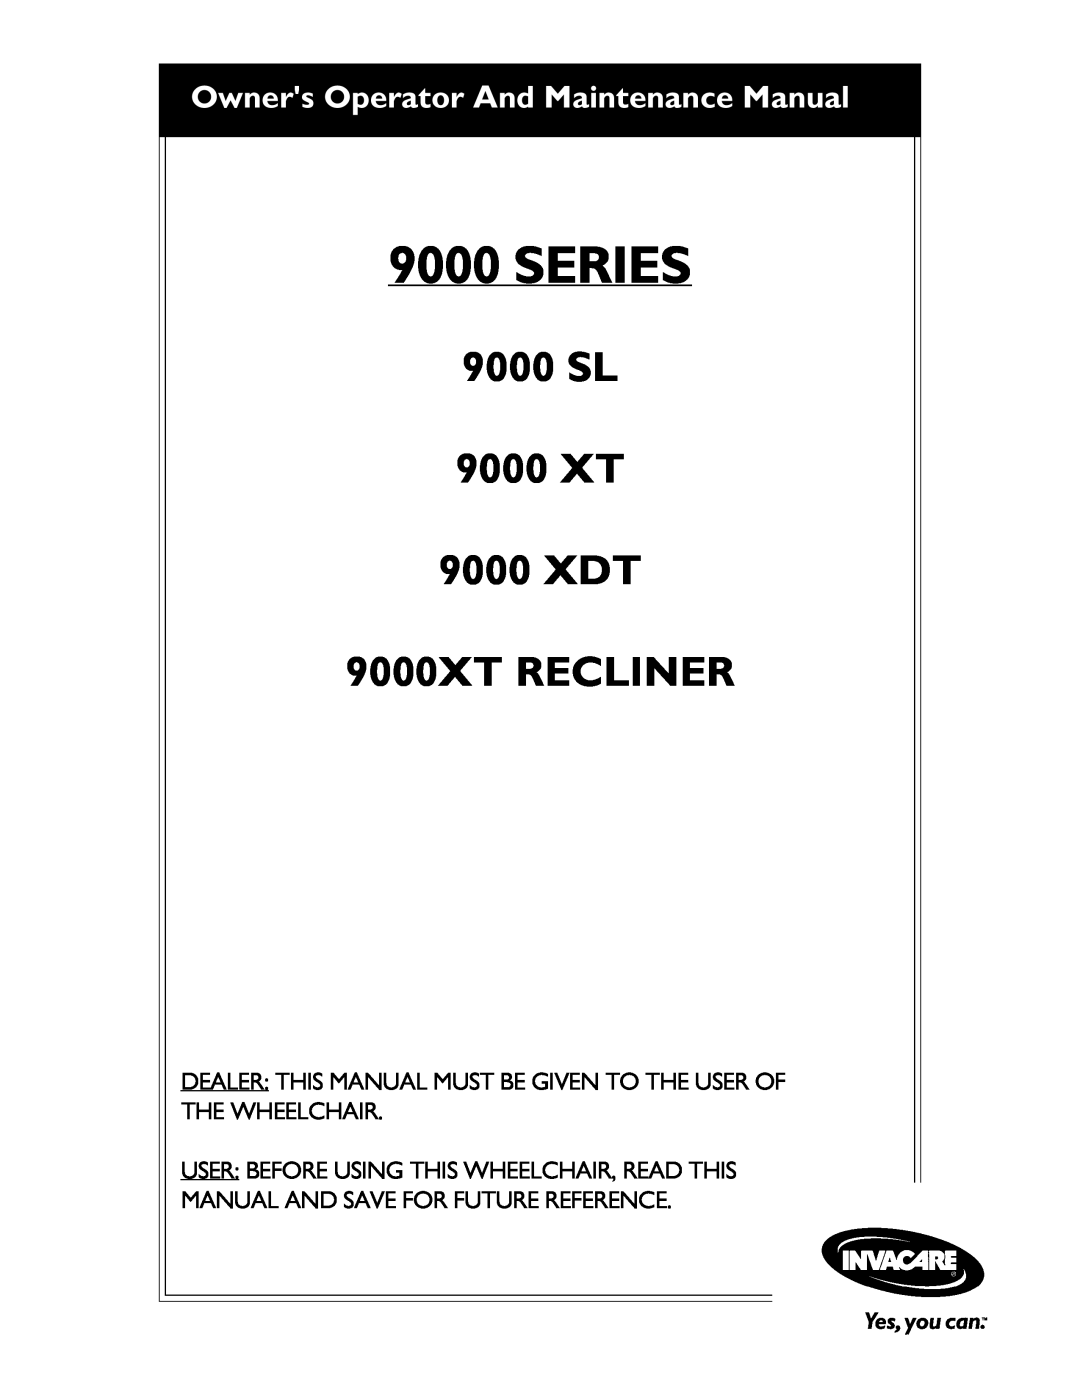 Invacare 9000XT Recliner manual Series, 9000 SL 9000 XT 9000 XDT 9000XT RECLINER, Owners Operator And Maintenance Manual 